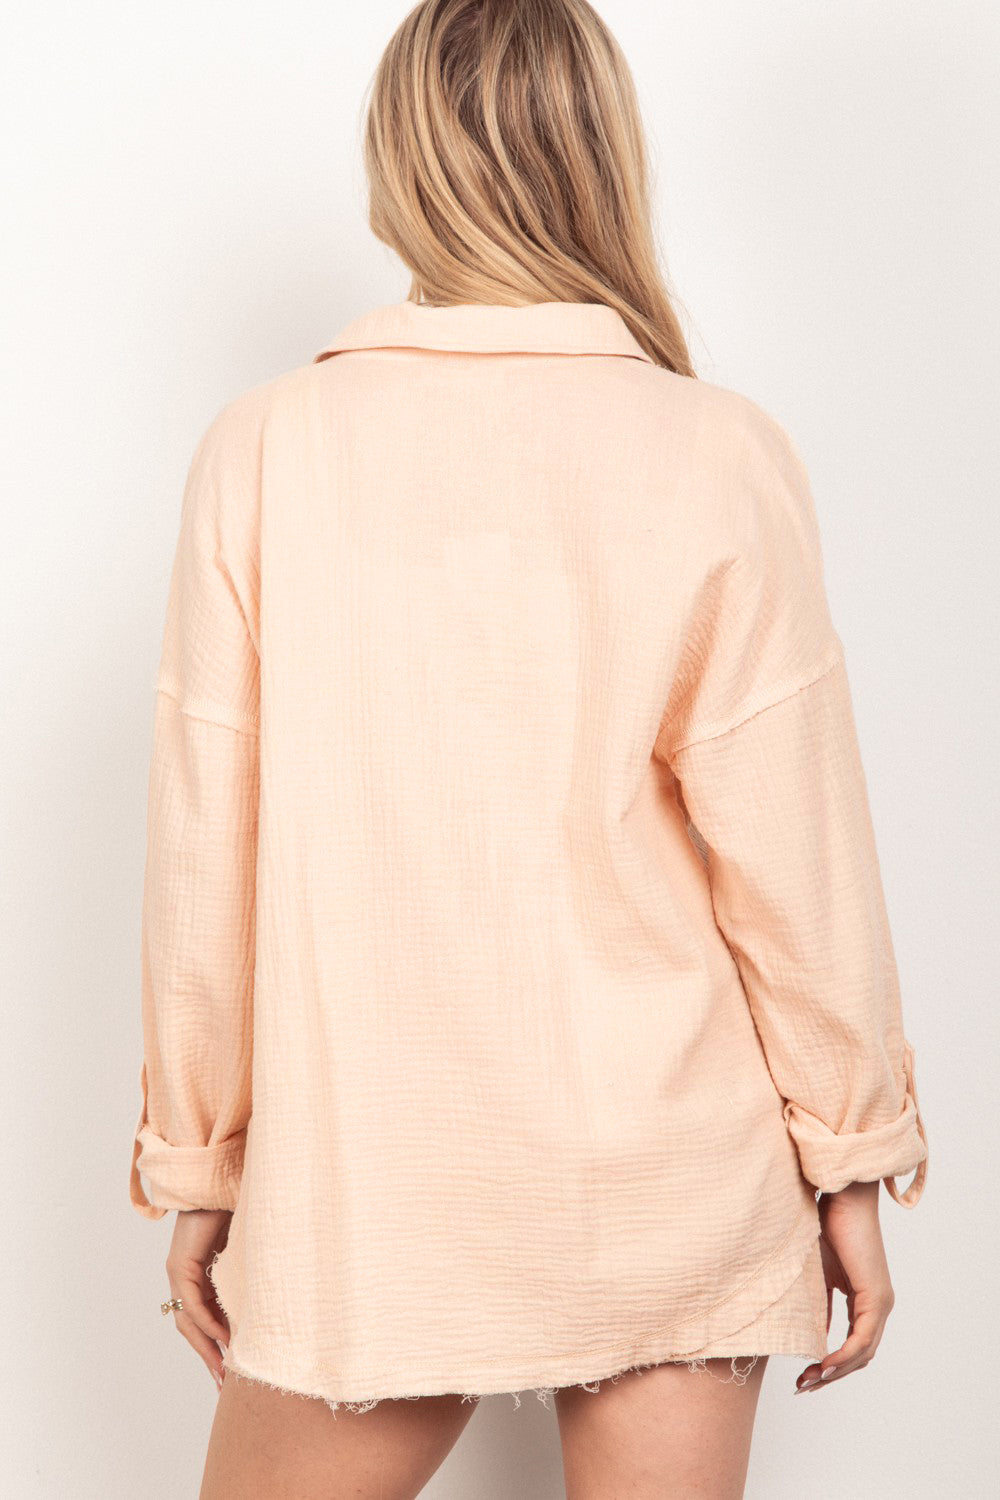 PLUS - Eva Cotton Gauze Woven Shirt Top